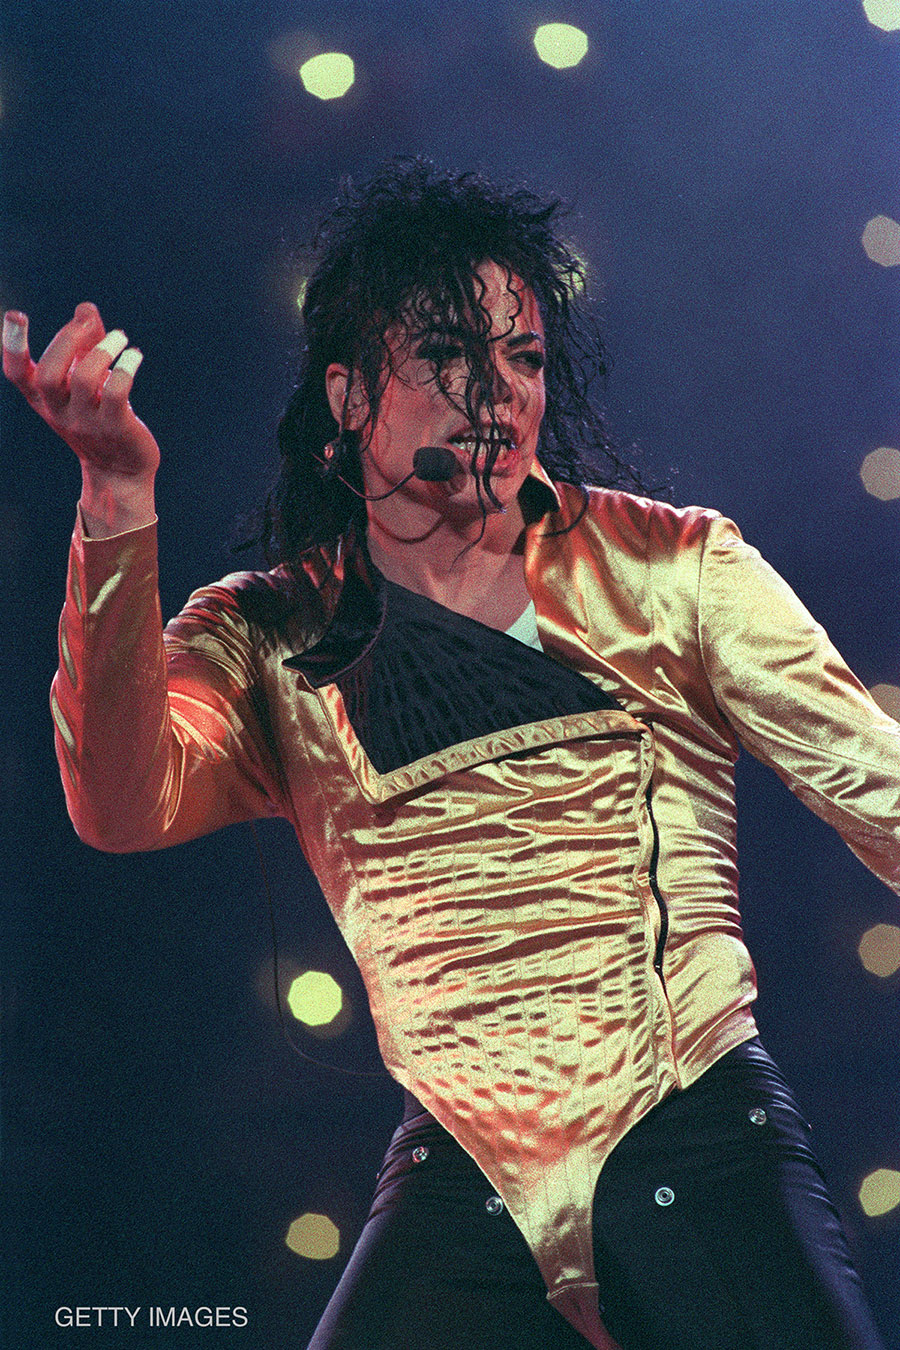 Michael Jackson at Tokyo Dome Stadium December 12, 1992